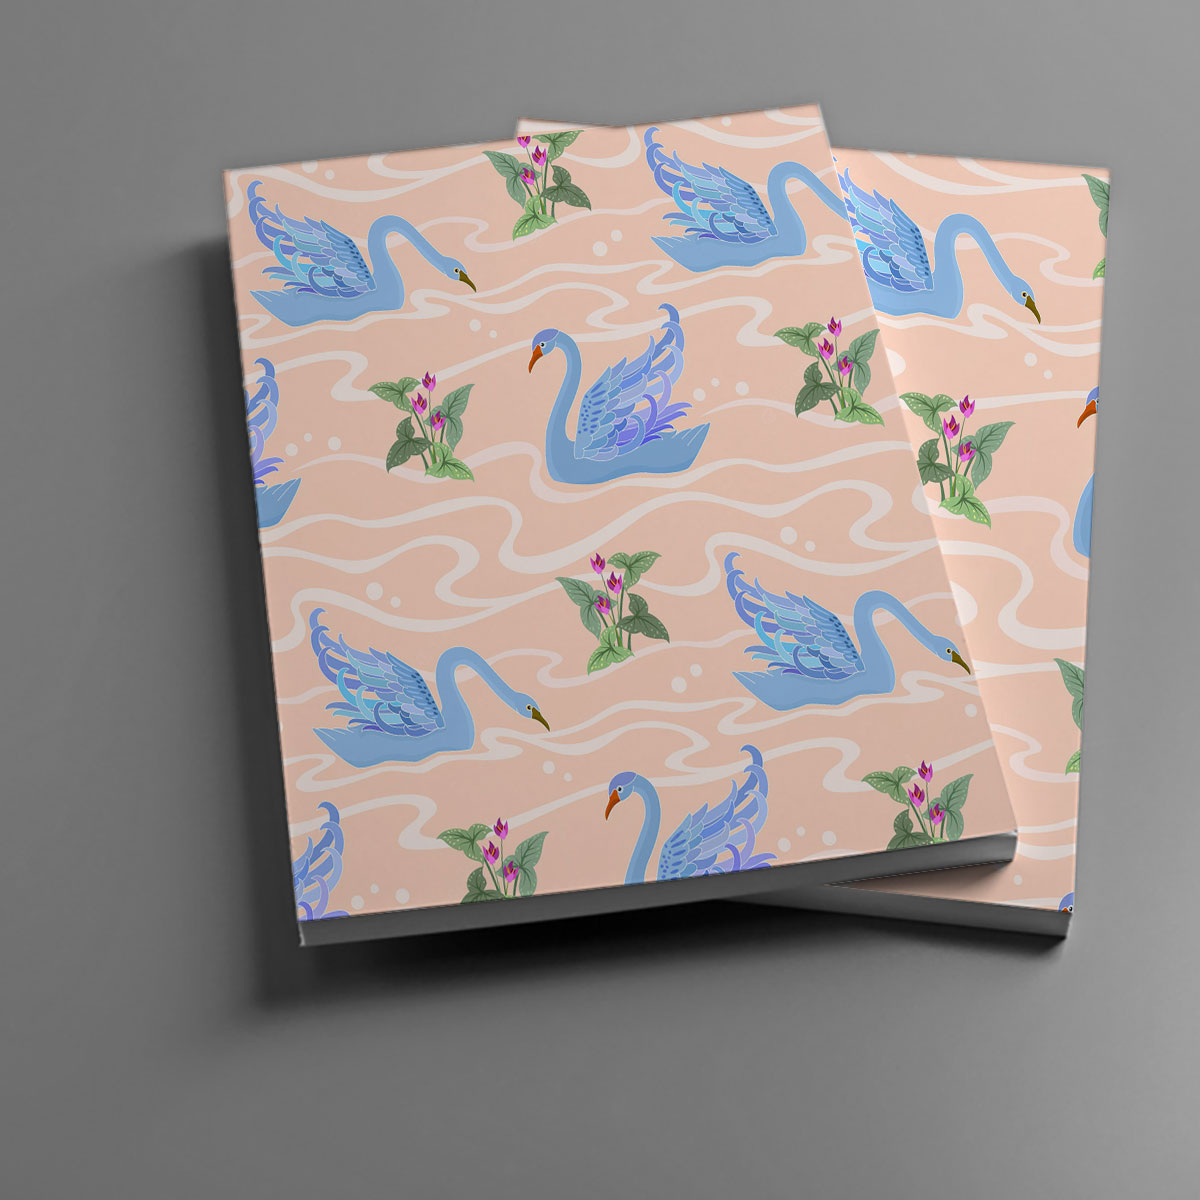 Floating Blue Swan Notebook